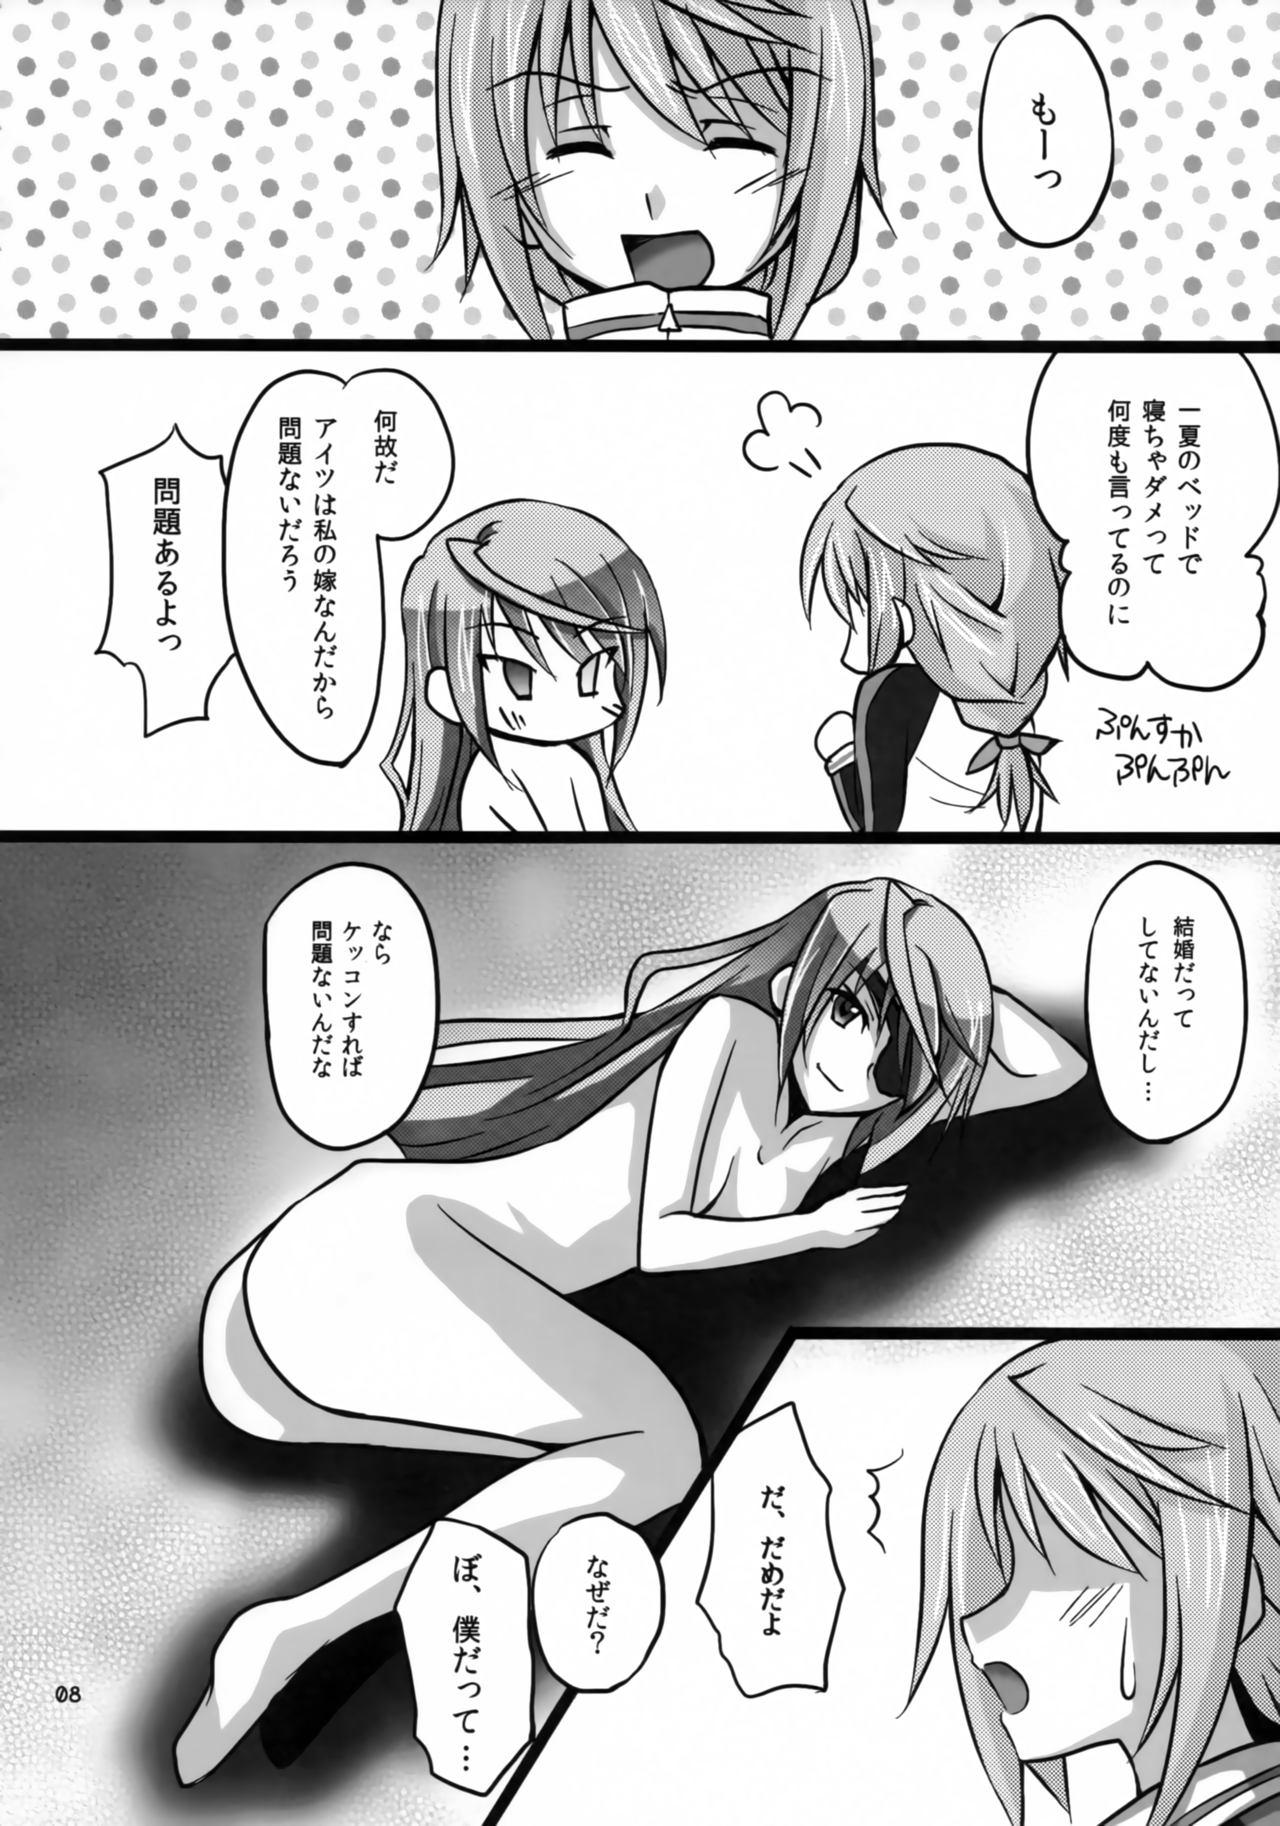 Fun Ichika to Sex Shitai - Infinite stratos Spread - Page 7